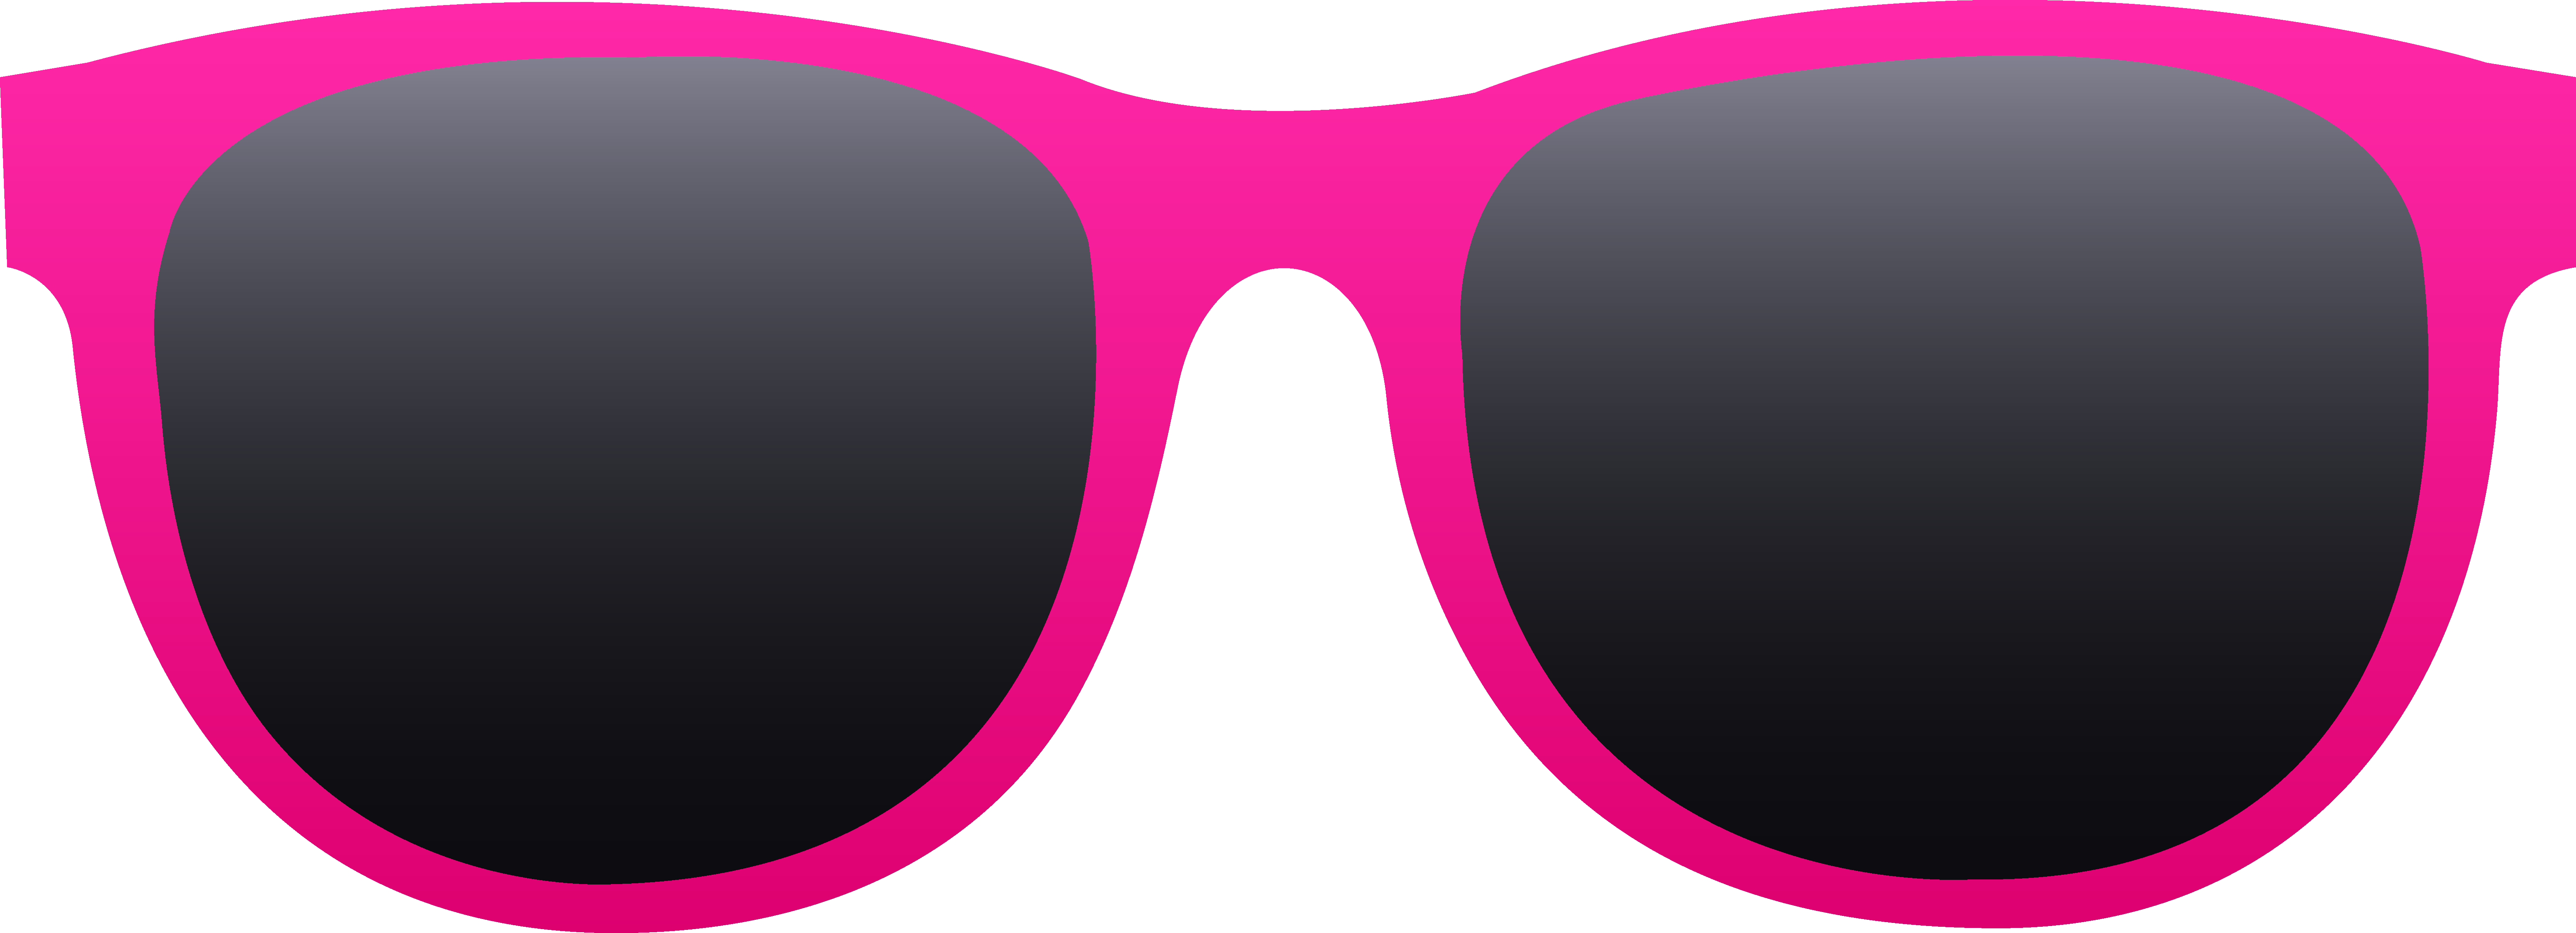 Wayfarer Glow Sunglasses Glasses Ray-Ban Free Download PNG HQ Clipart